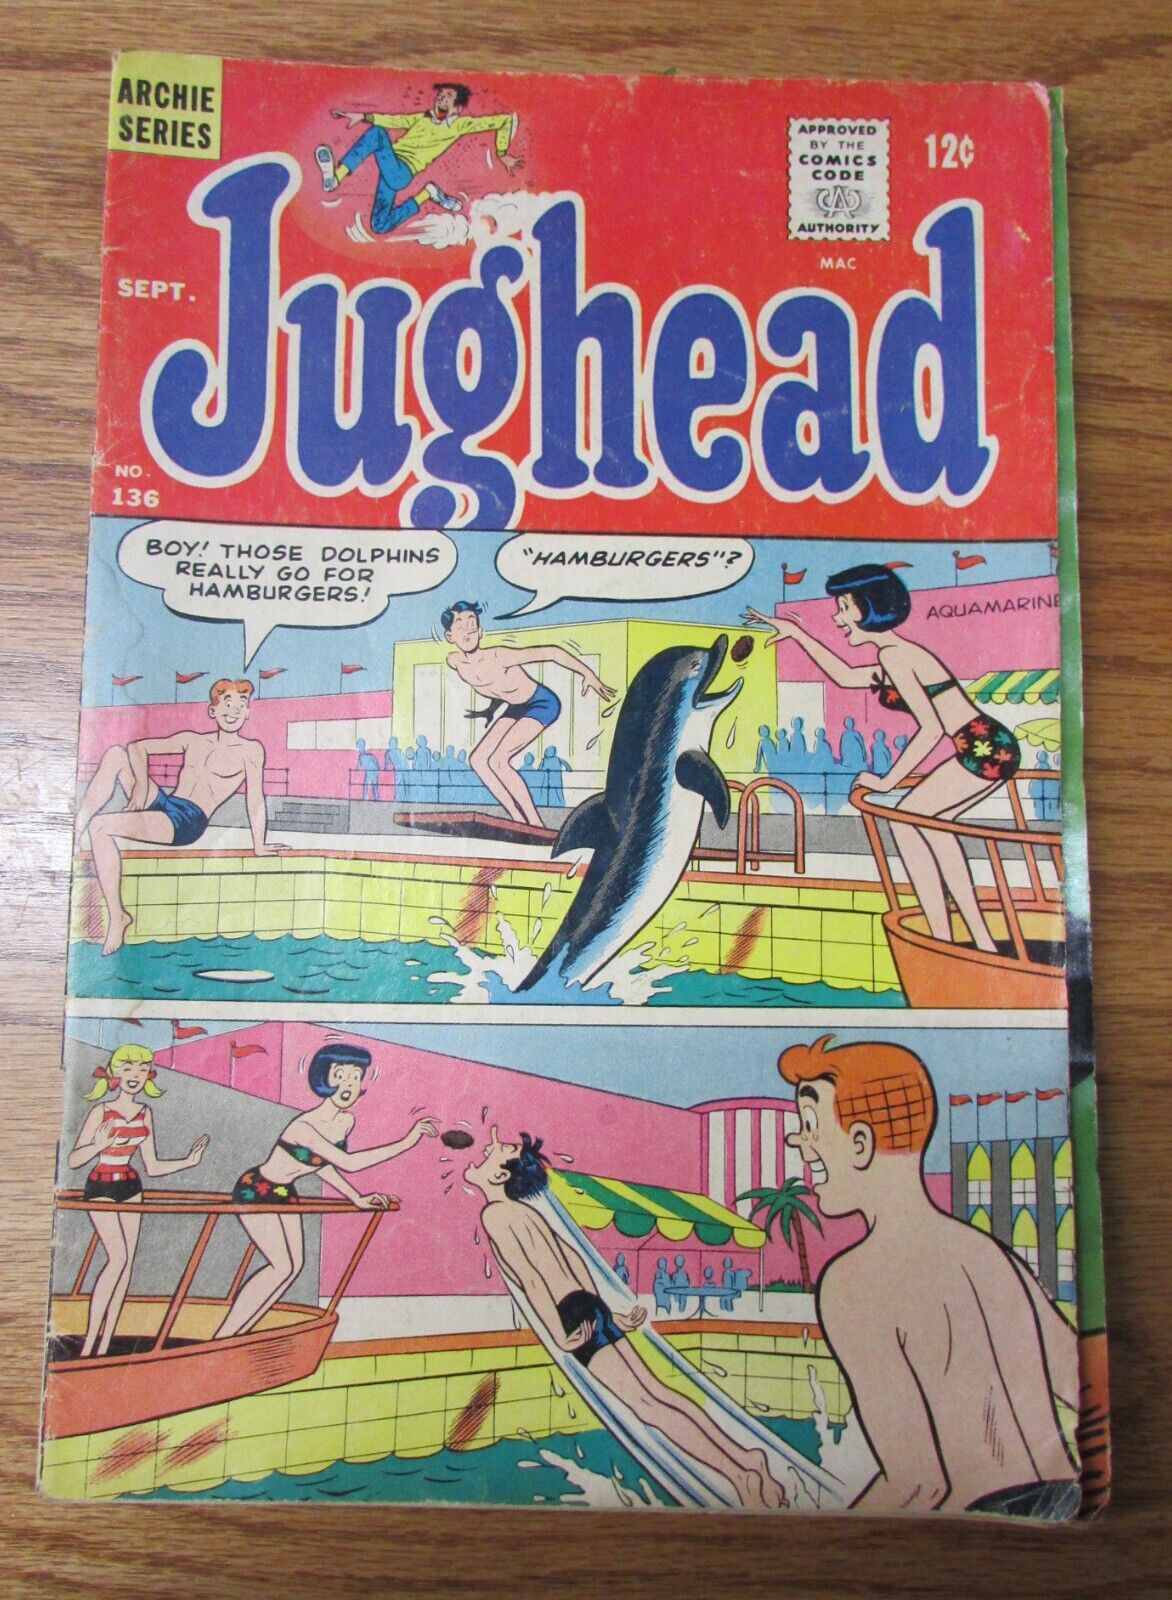 COMIC BOOK ARCHIE SERIES COMICS JUGHEAD #136 SEPT 1966 12¢